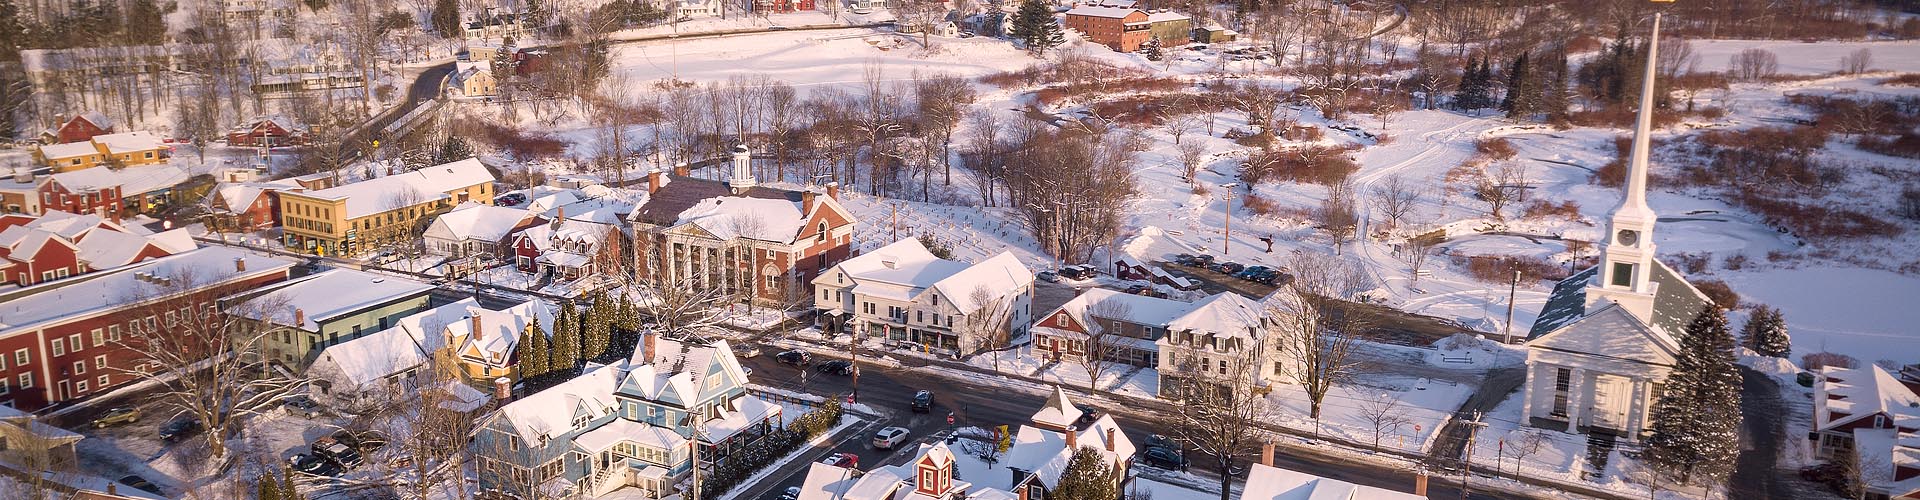 Stowe Village in Winter